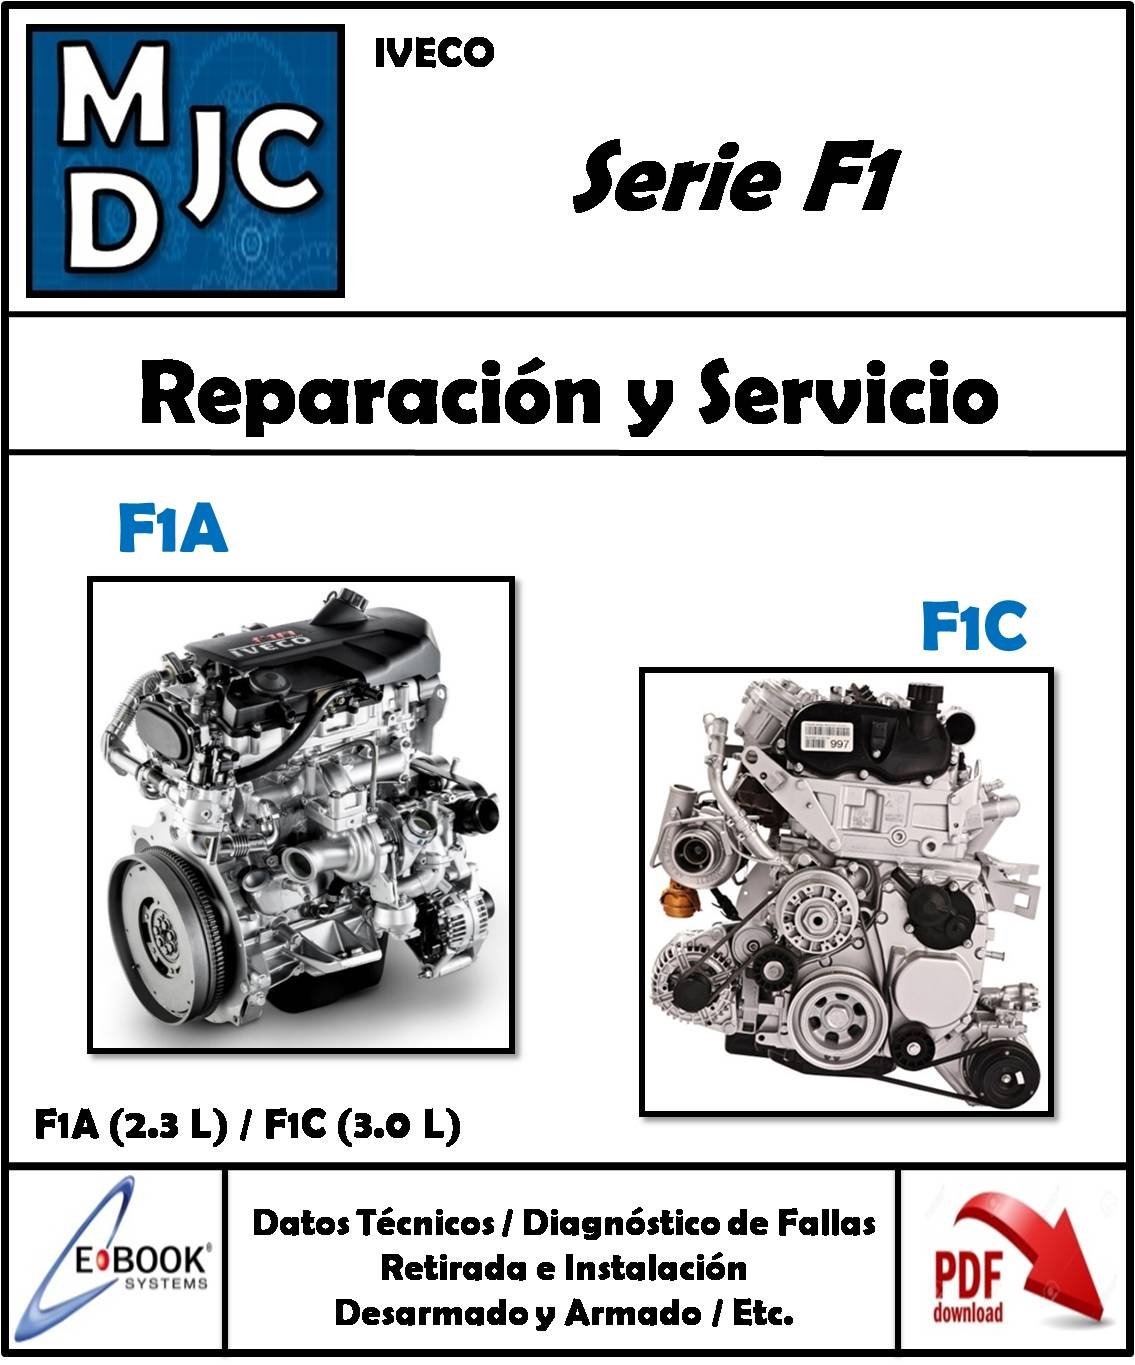 Iveco  F1A / F1C  Motores  Serie F1 (2.3 L / 3.0 L)